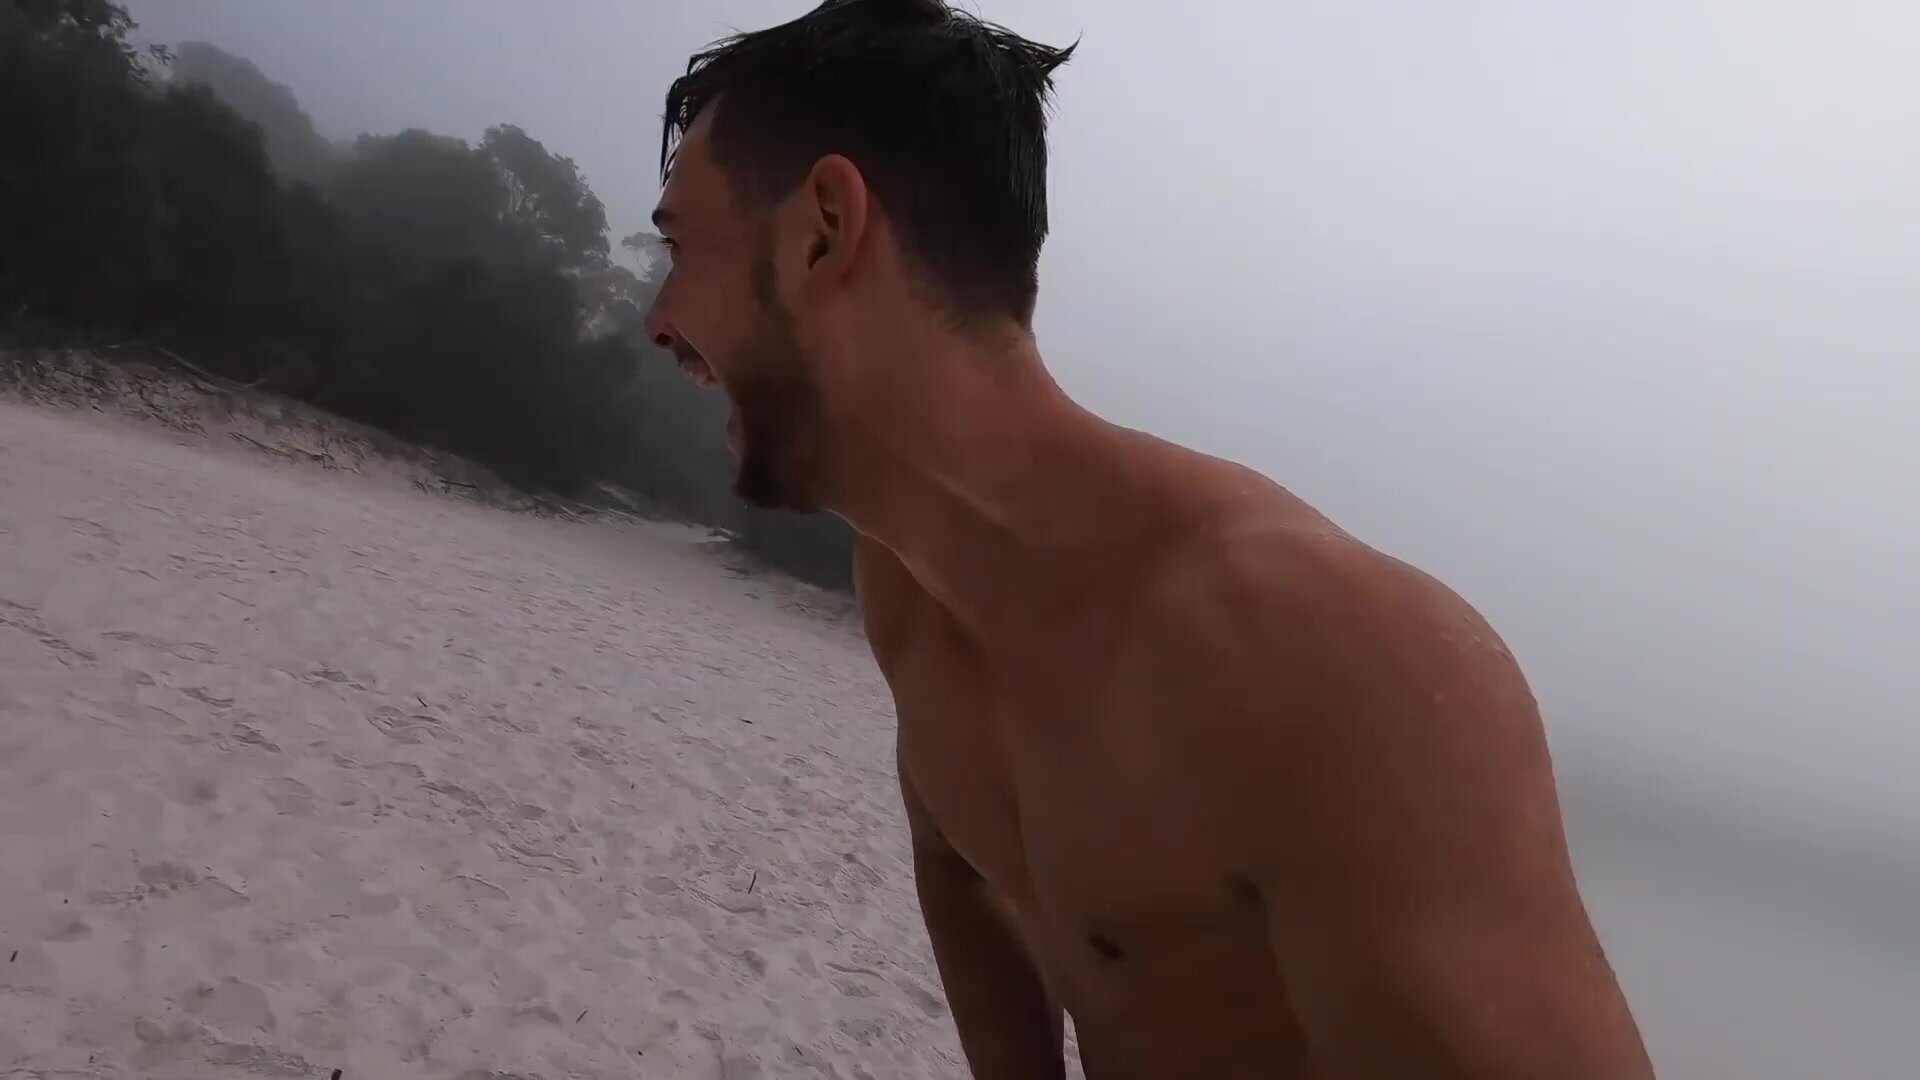 Hot Guys: Aussie vs. German Skinny Dipping - ThisVid.com